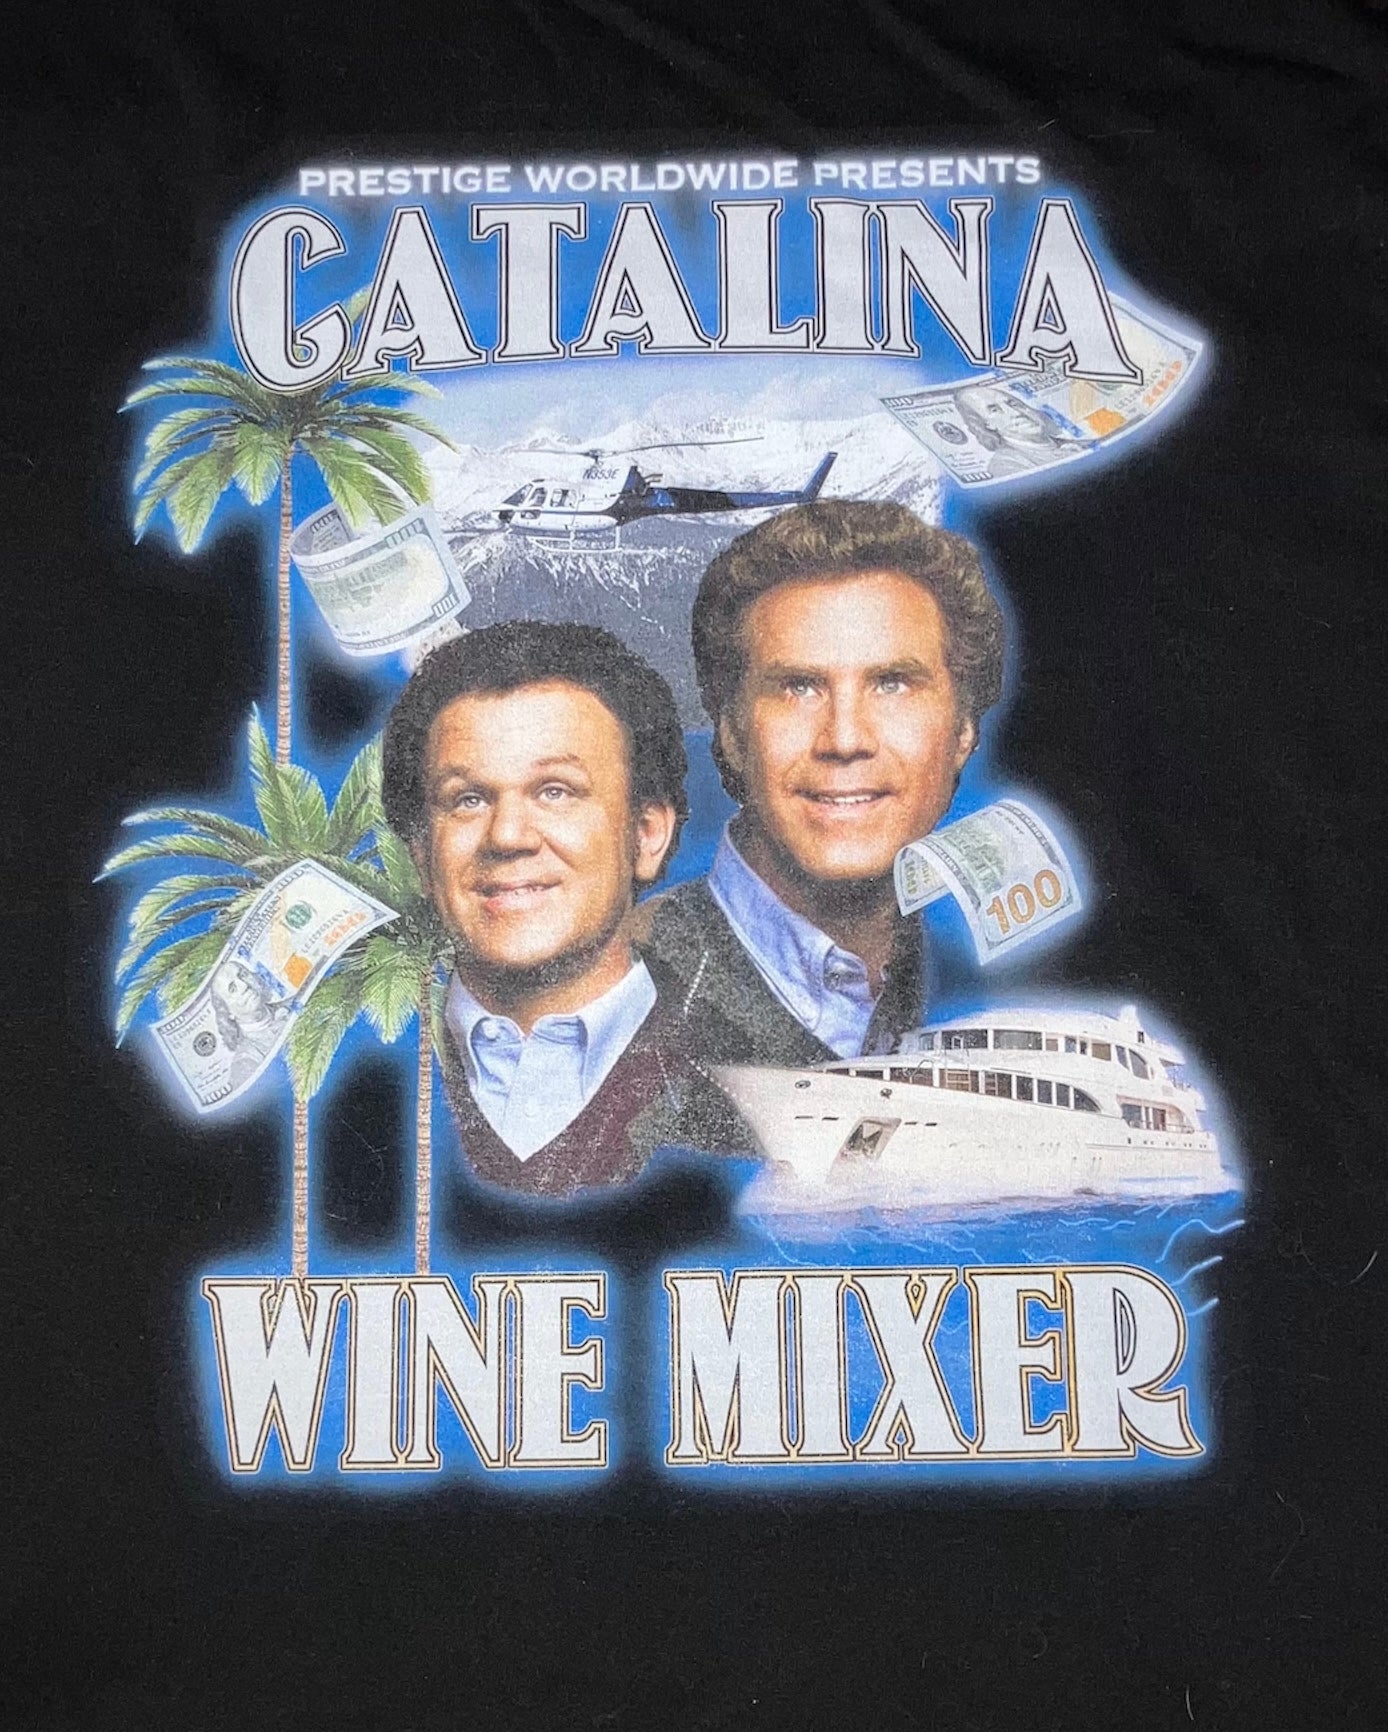 Step brothers Catalina wine mixer tee